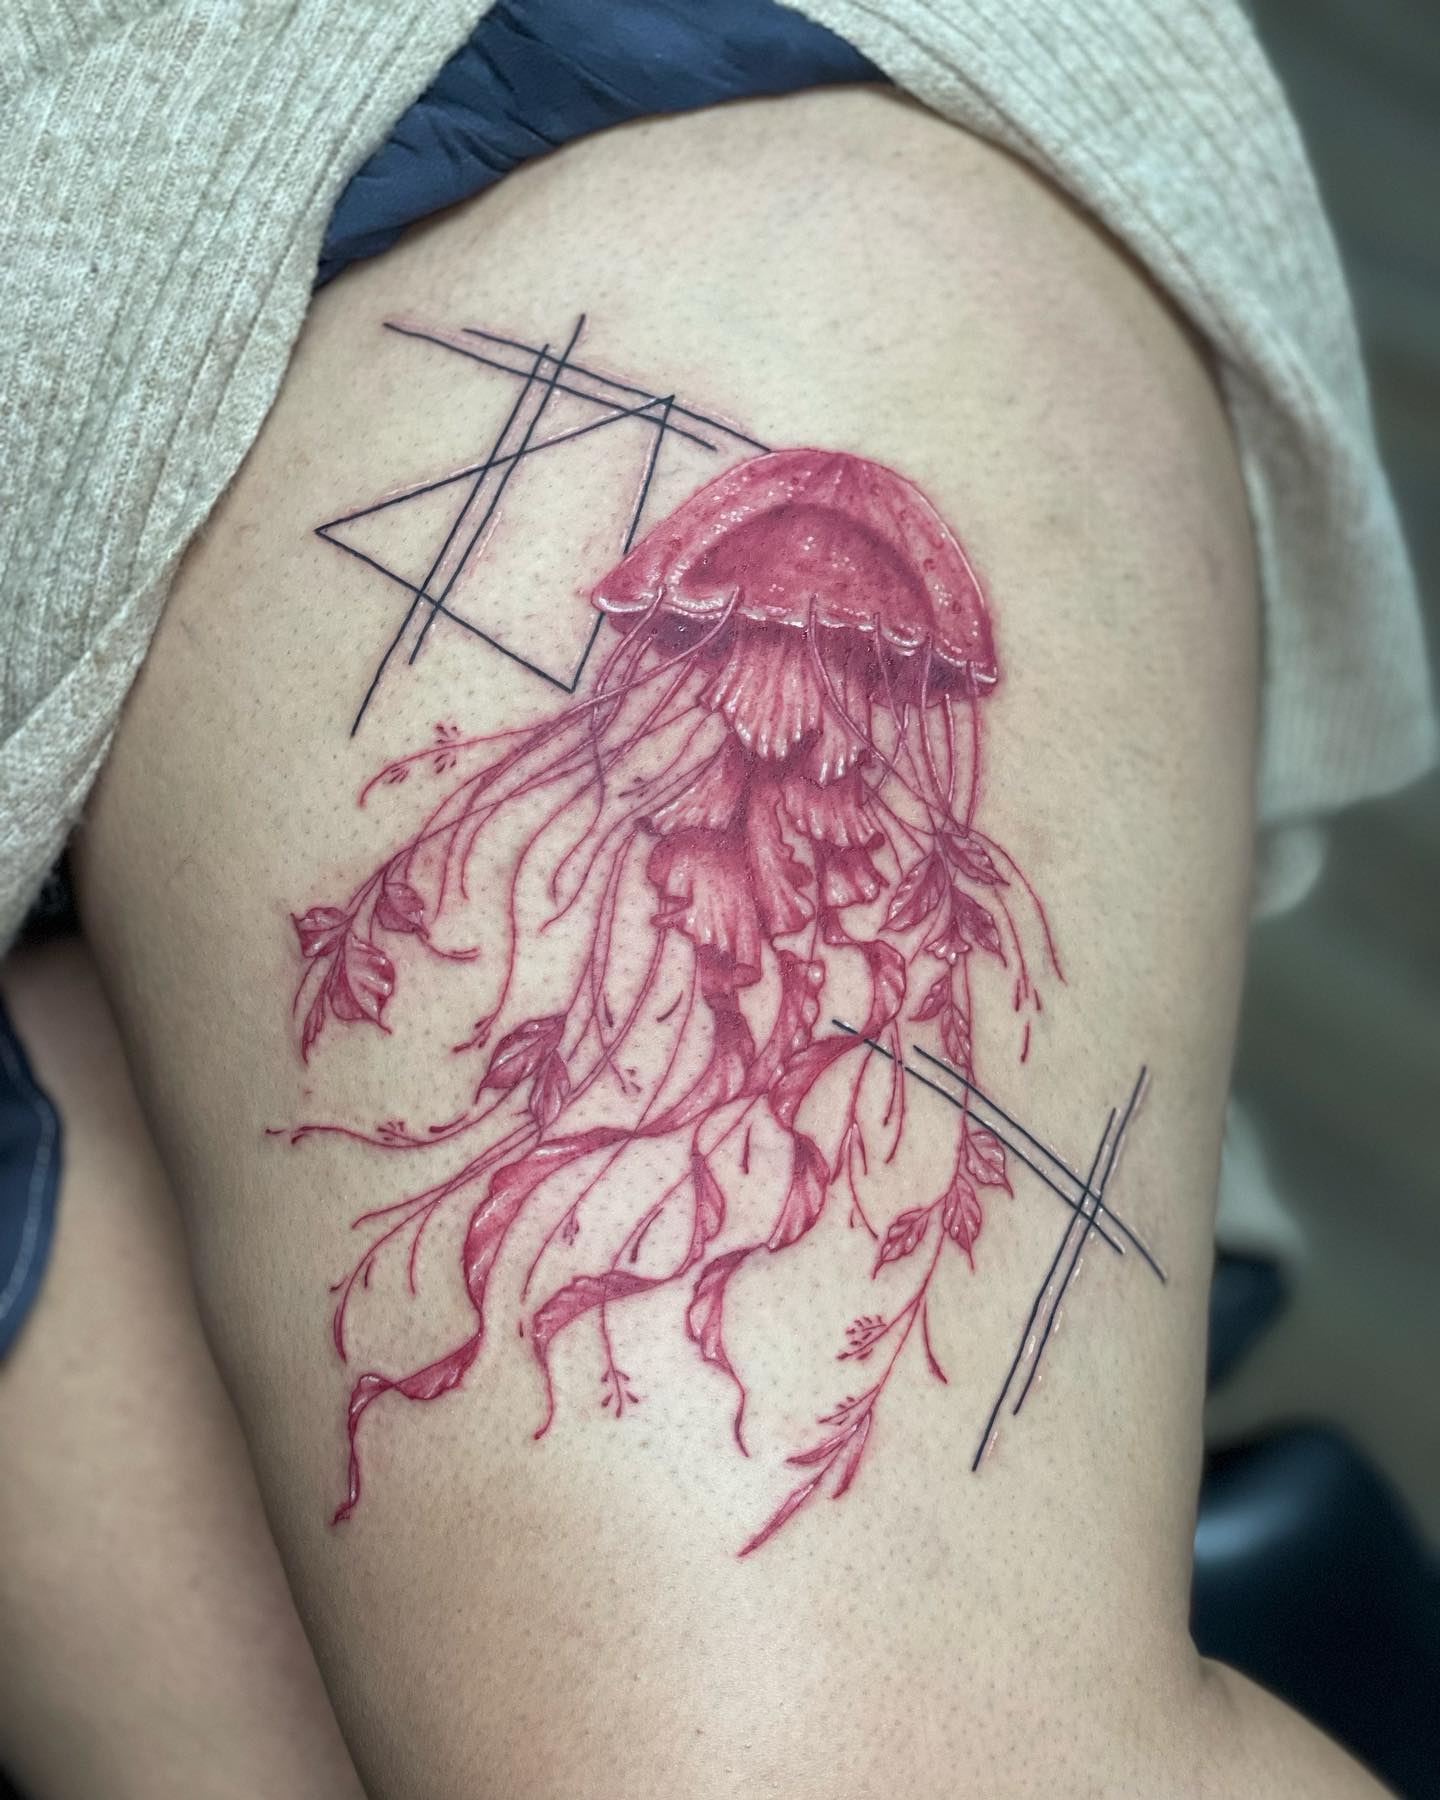 Tatuaje de medusa fresca en el muslo